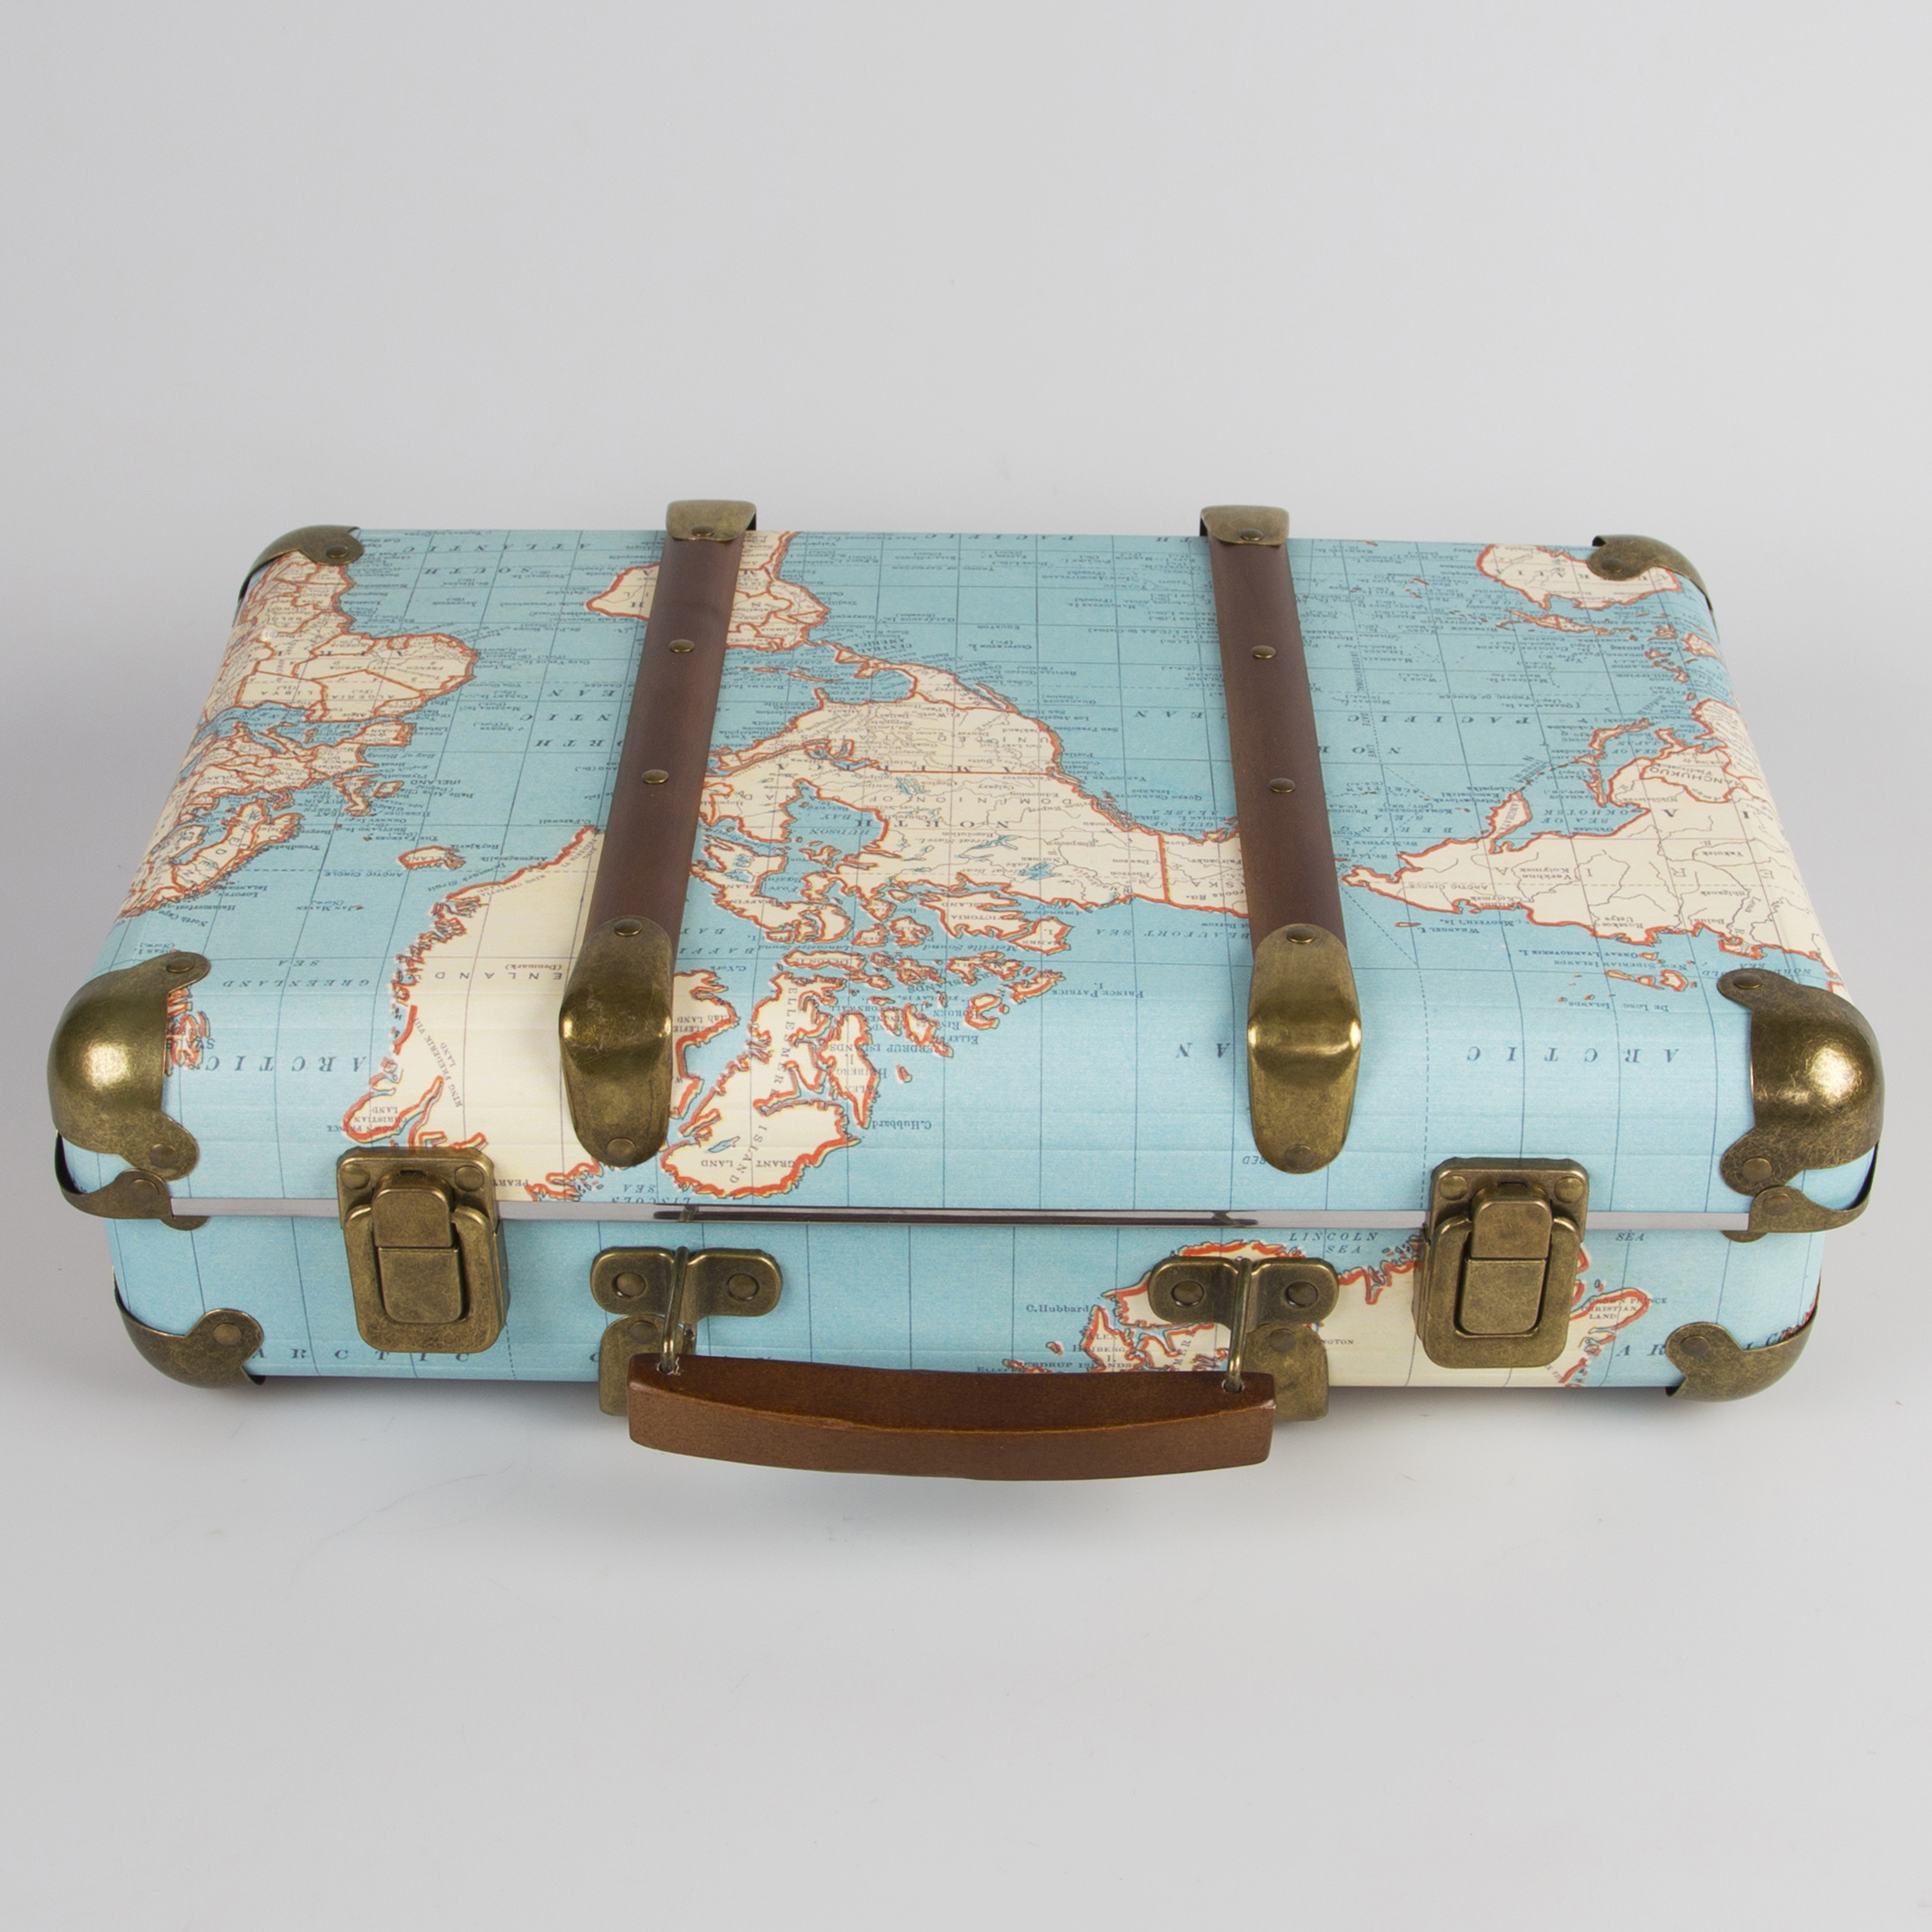 Around the World Suitcase